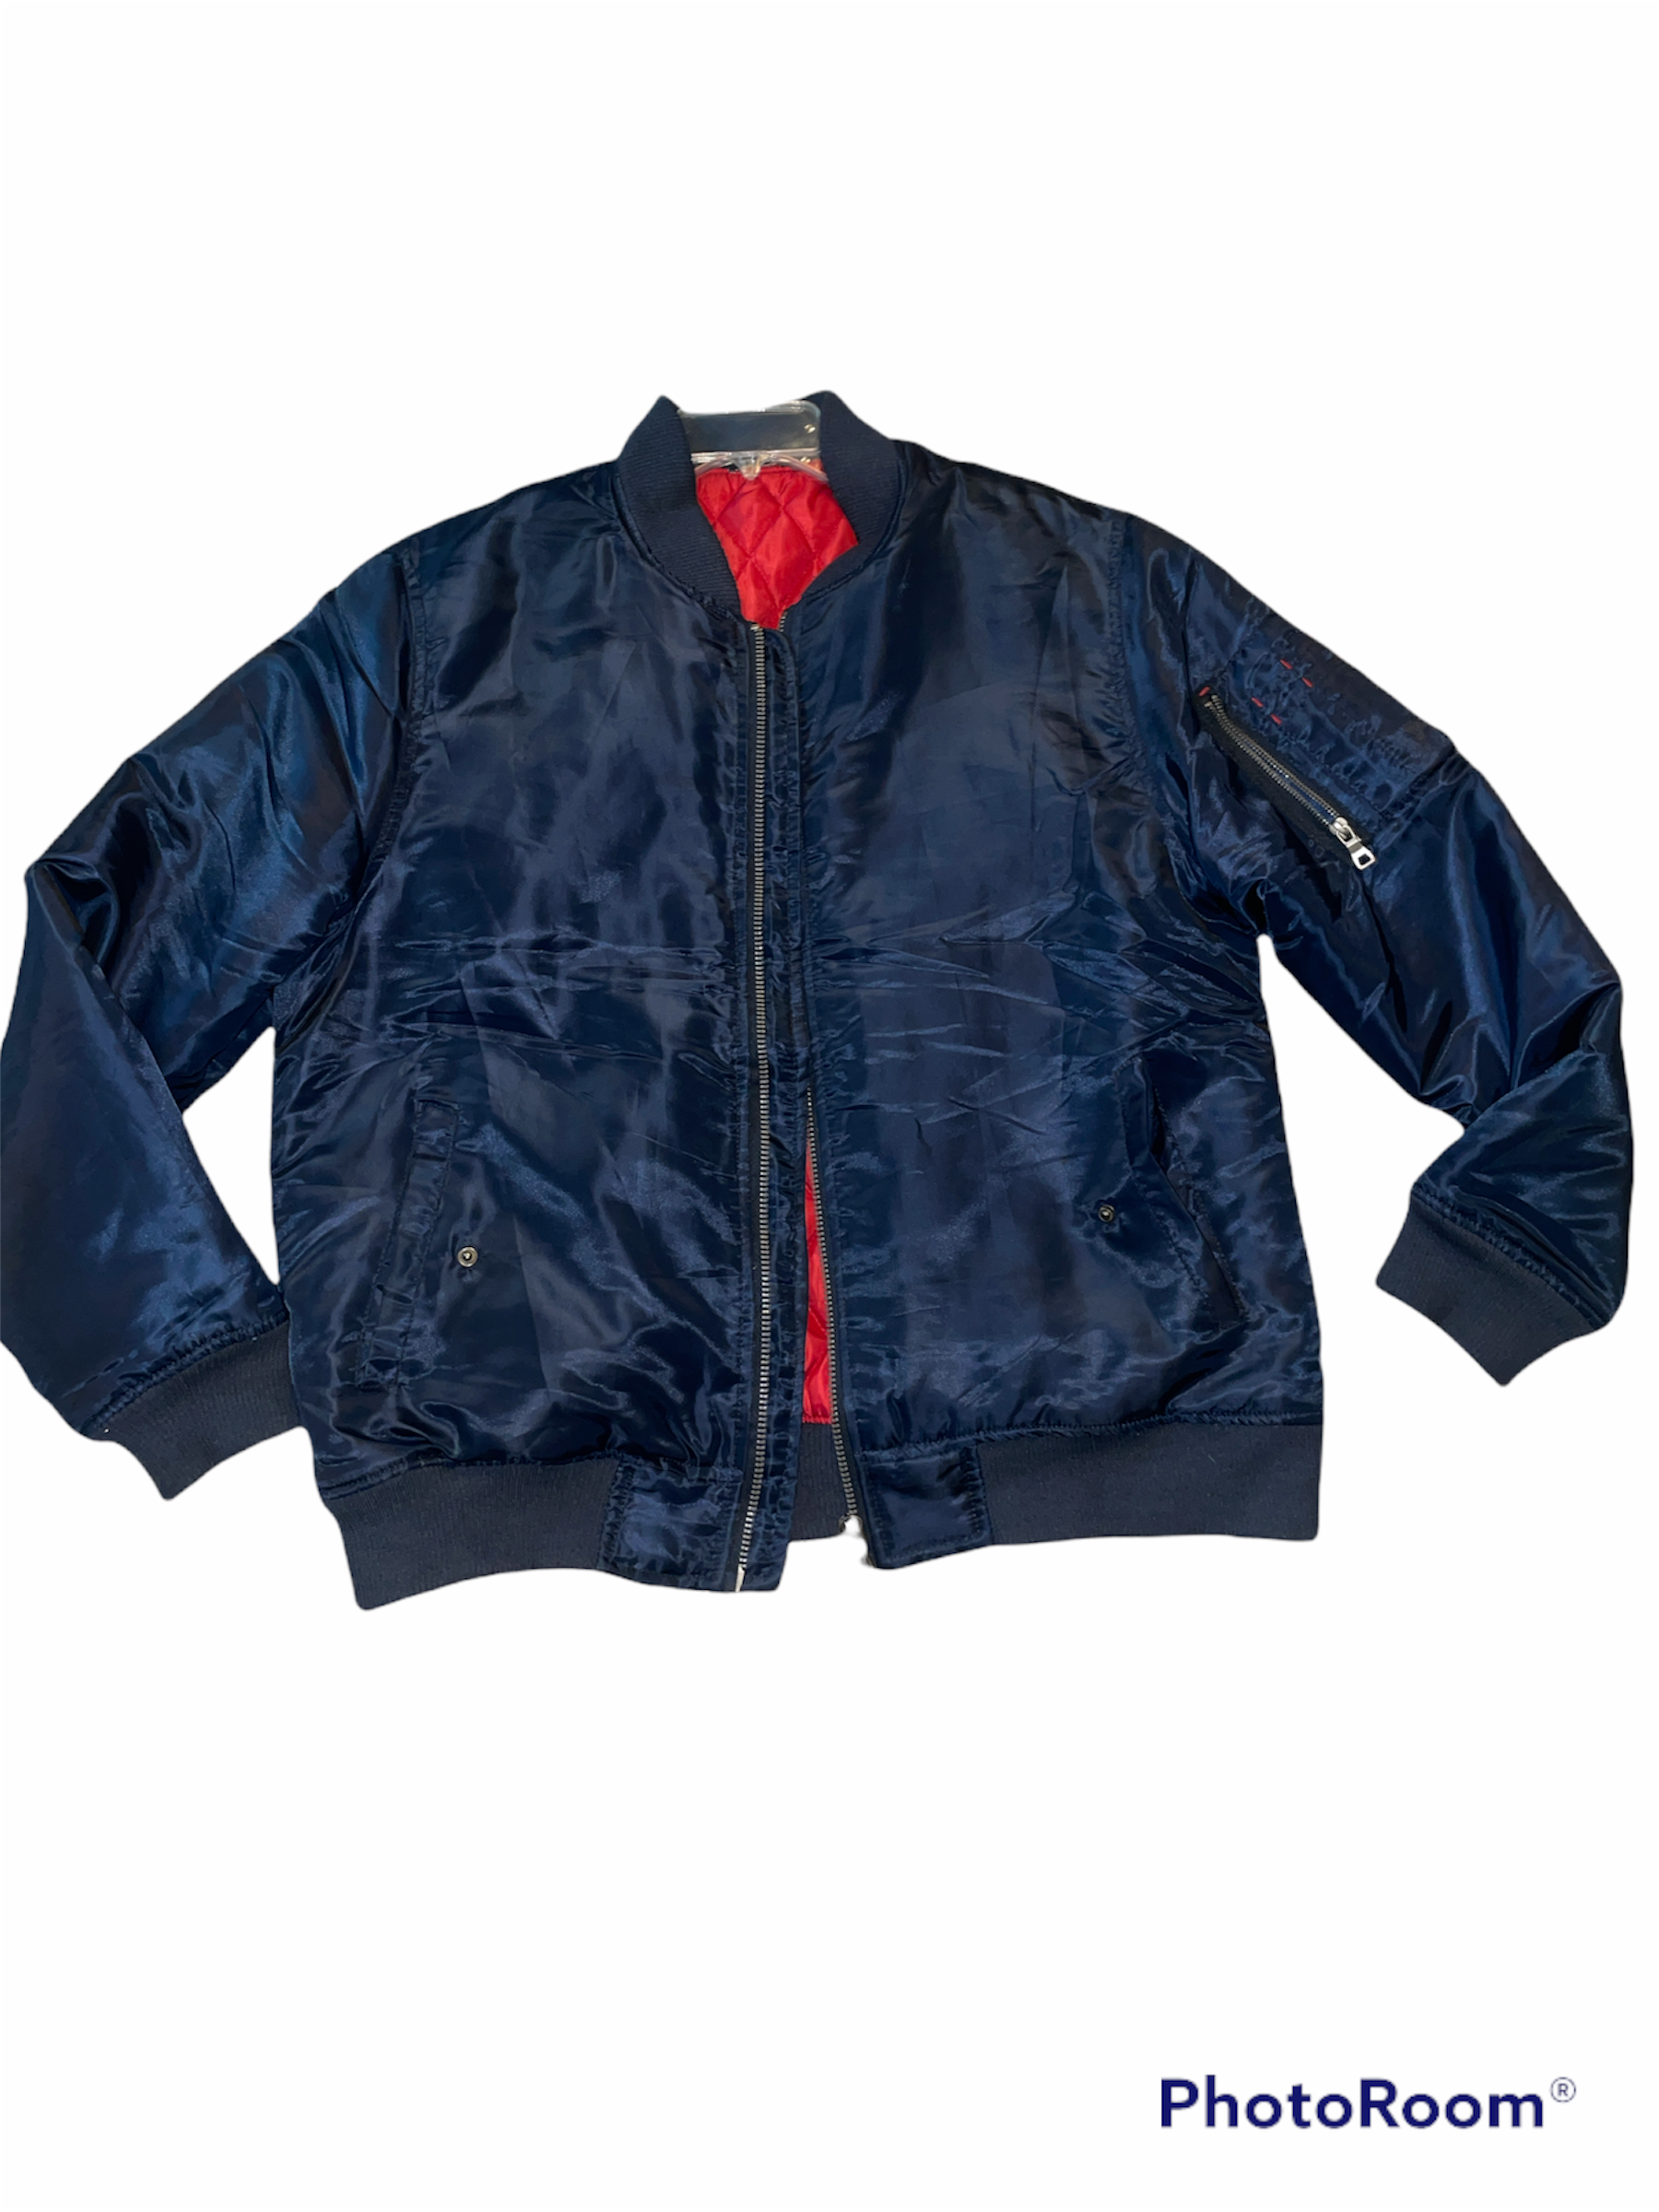 Brand New Bravest Studio Puffer Jacket - M for Sale in Stickney, IL -  OfferUp